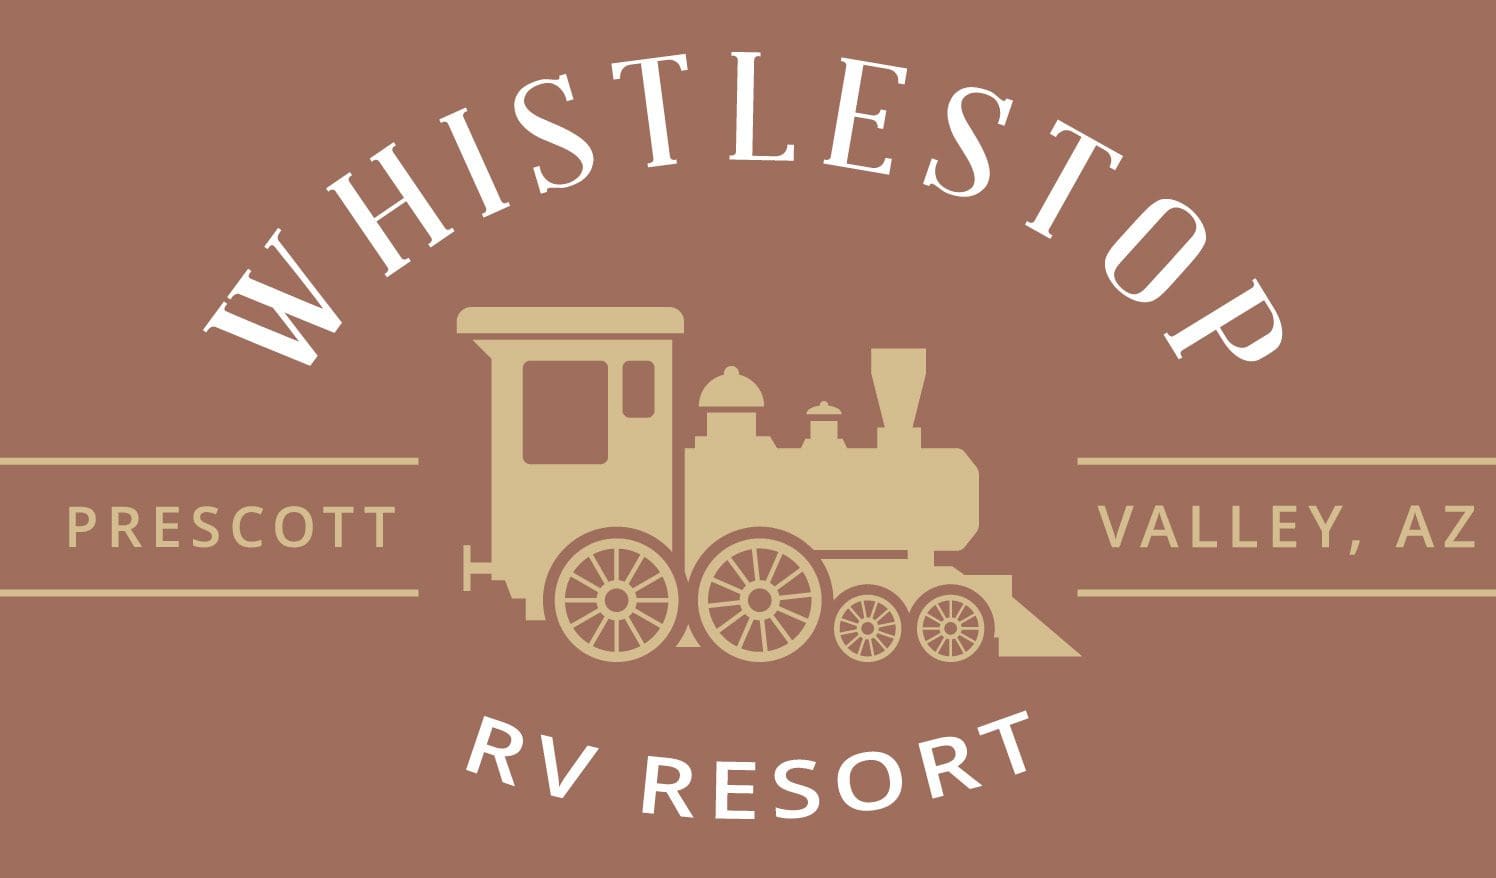 Whistlestop RV Resort logo